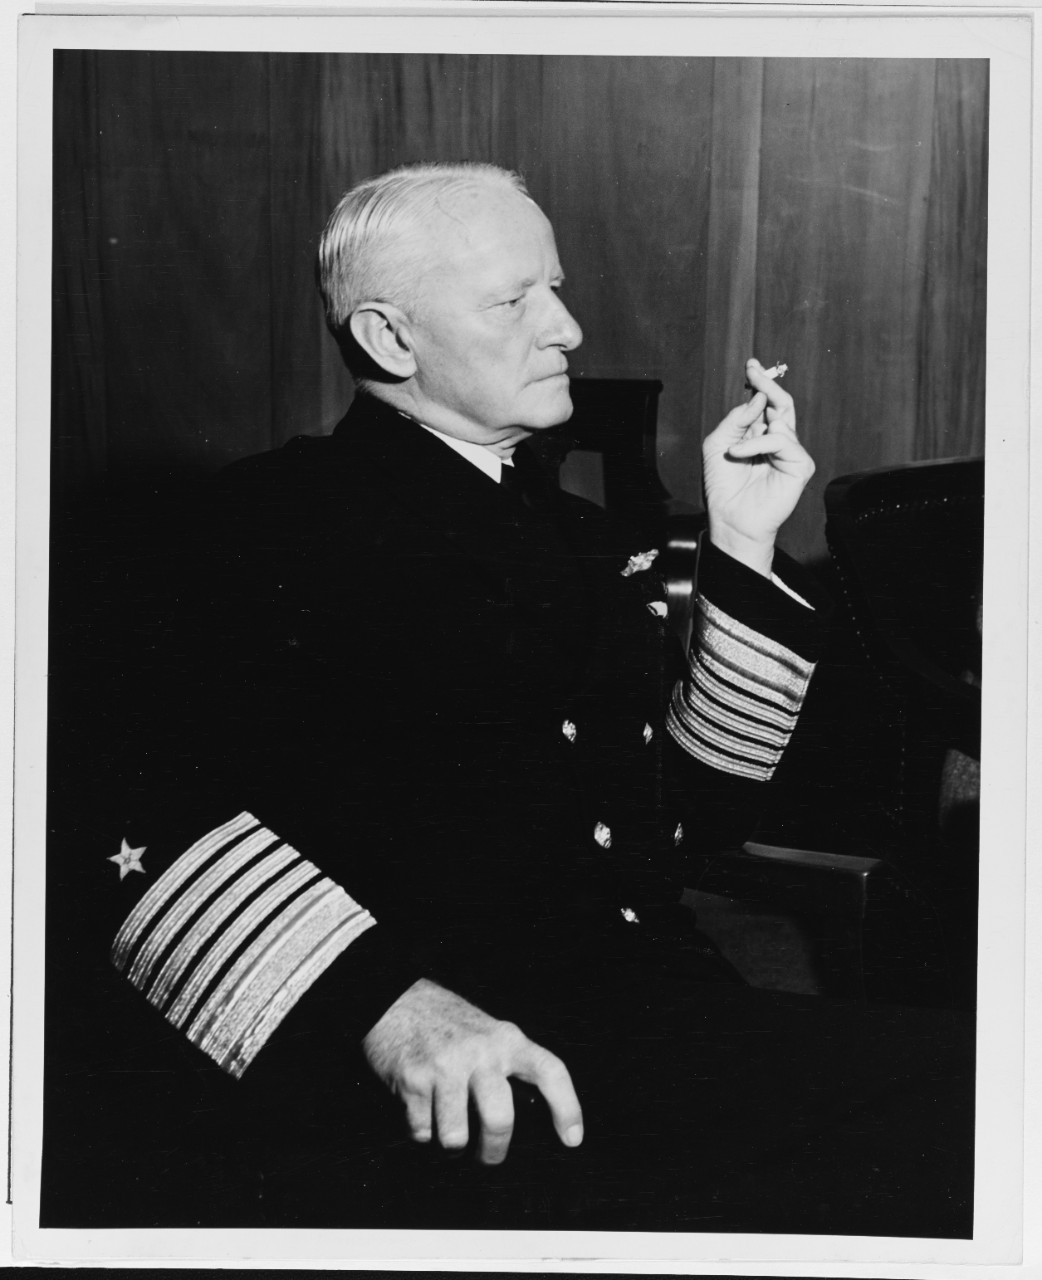 Fleet Admiral Nimitz during a Press Conference